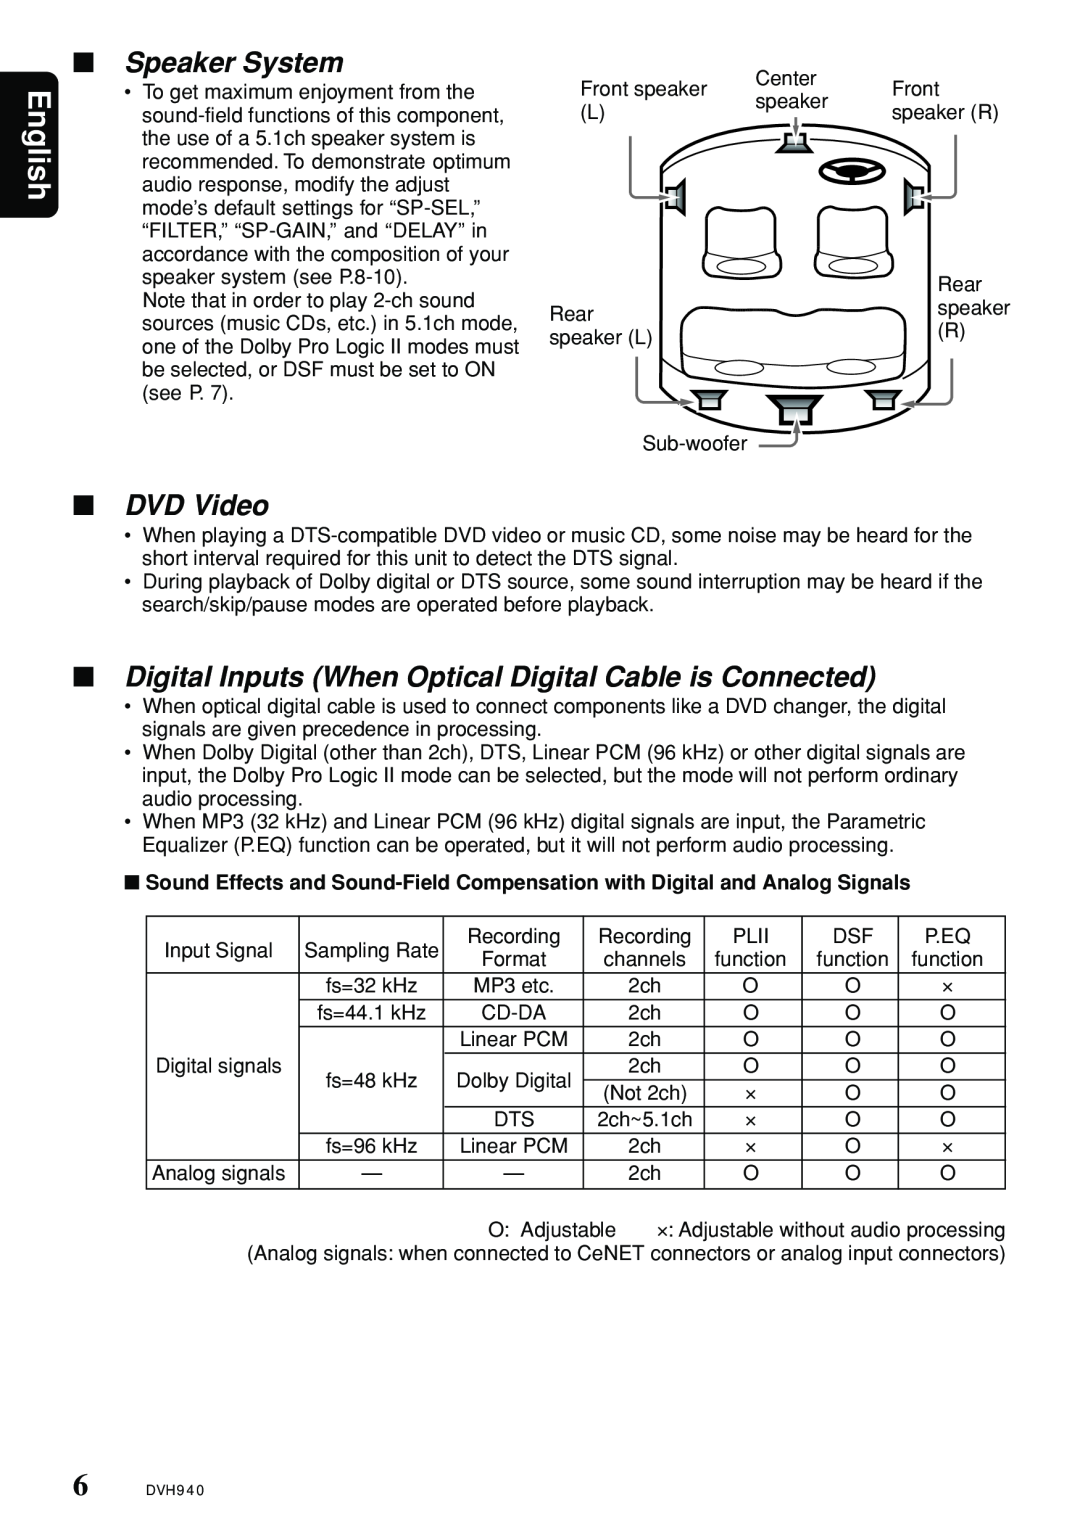 Clarion DVH940N owner manual English, Speaker System, DVD Video 